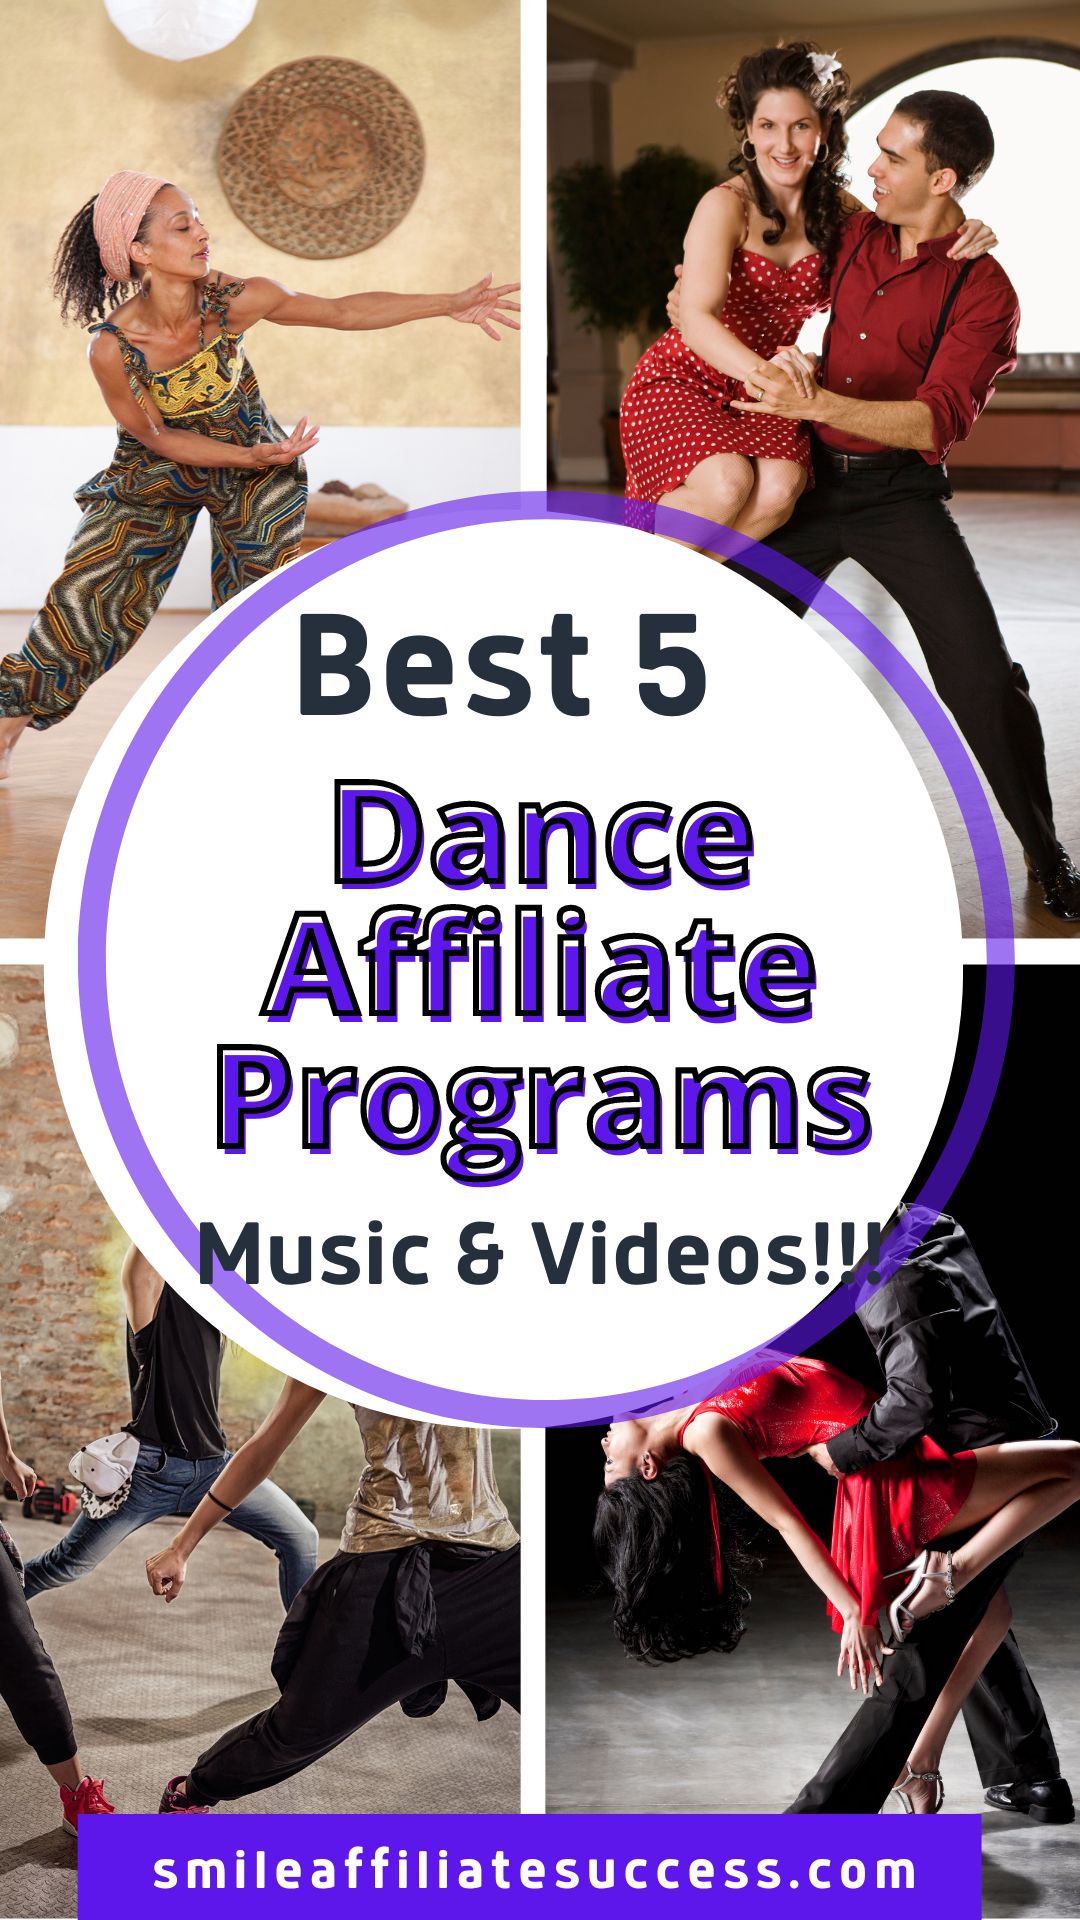 Best 5 Dance Affiliate Programs